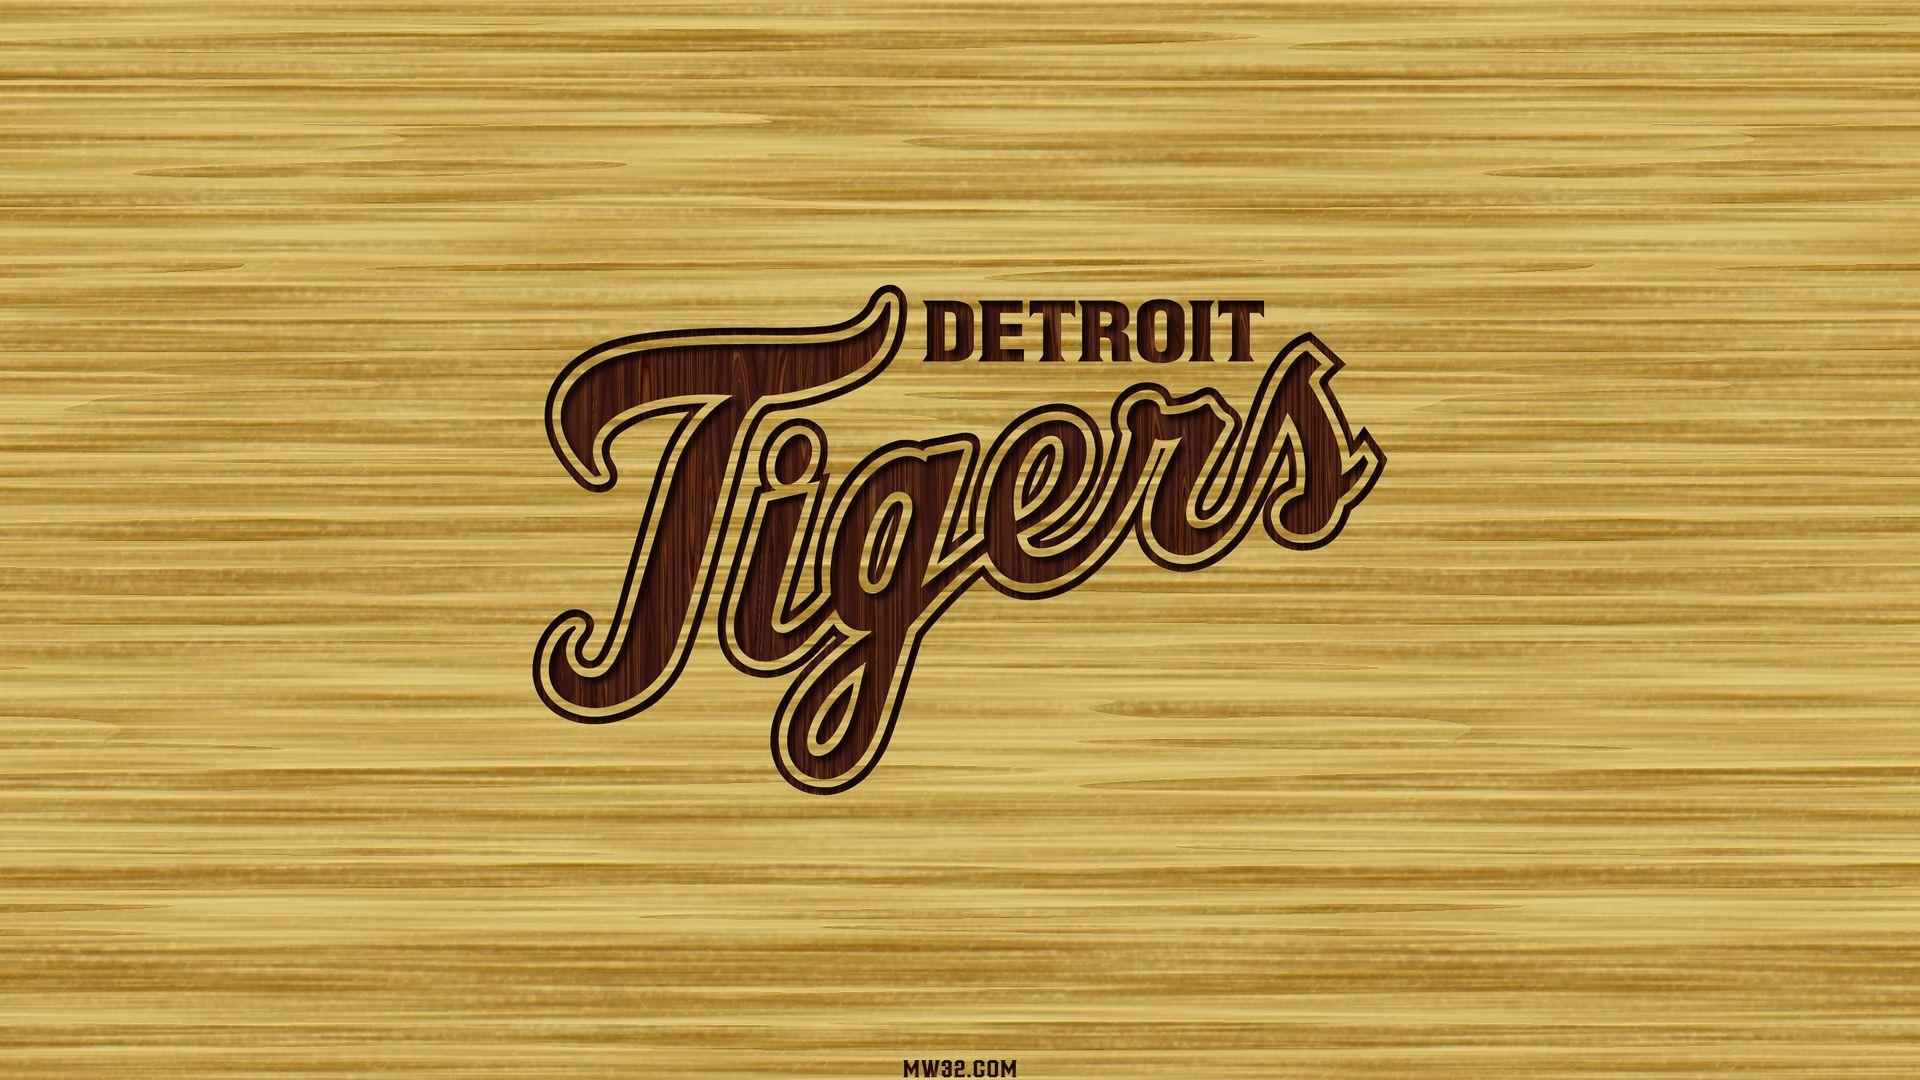 In Gallery: Detroit Tigers Wallpaper, 38 Detroit Tigers HD